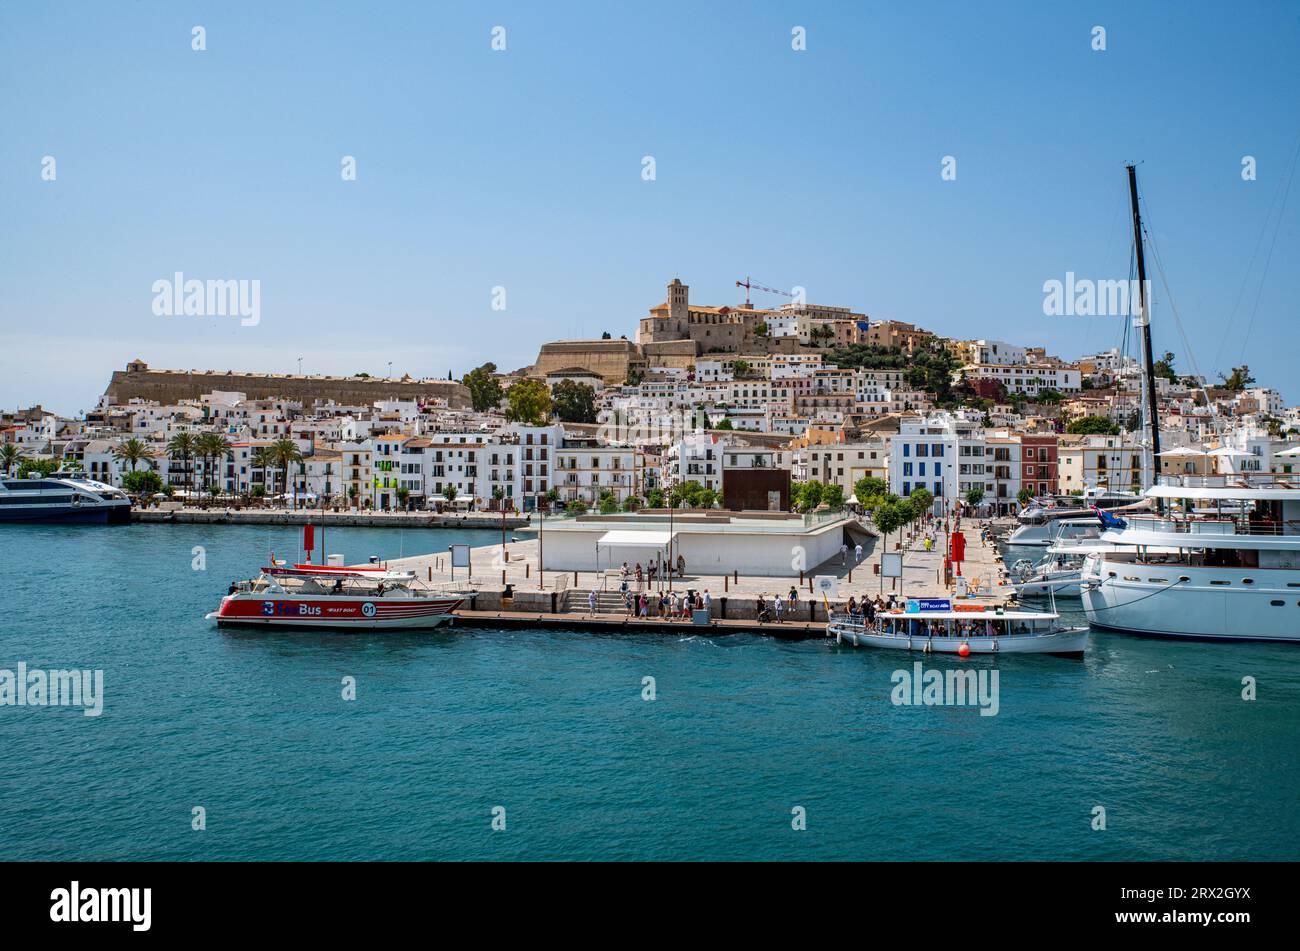 The town of Ibiza, Ibiza, Balearic Islands, Spain, Mediterranean, Europe Stock Photo